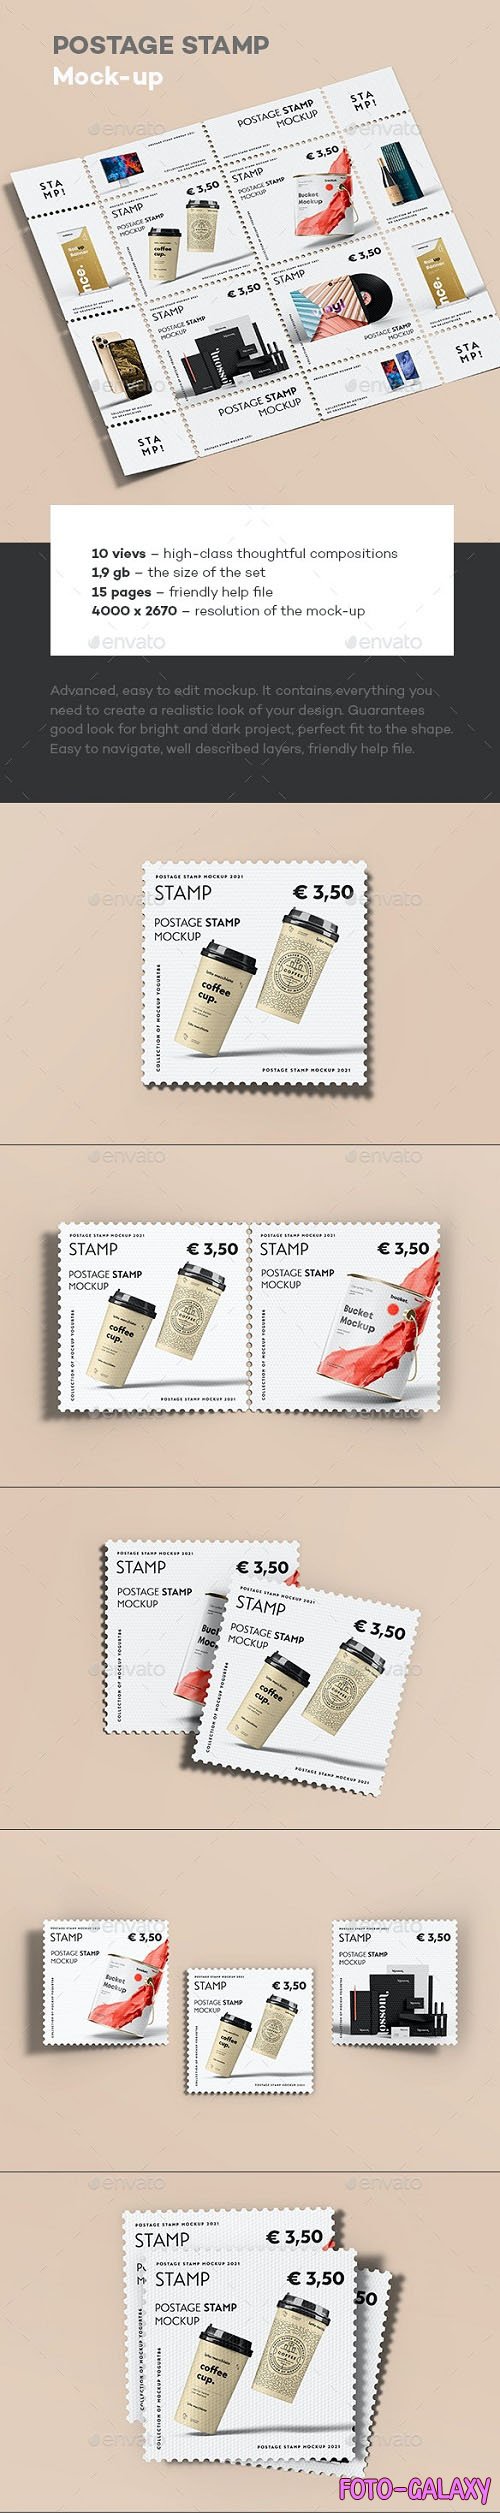 Postage Stamp Mockup - 32396102